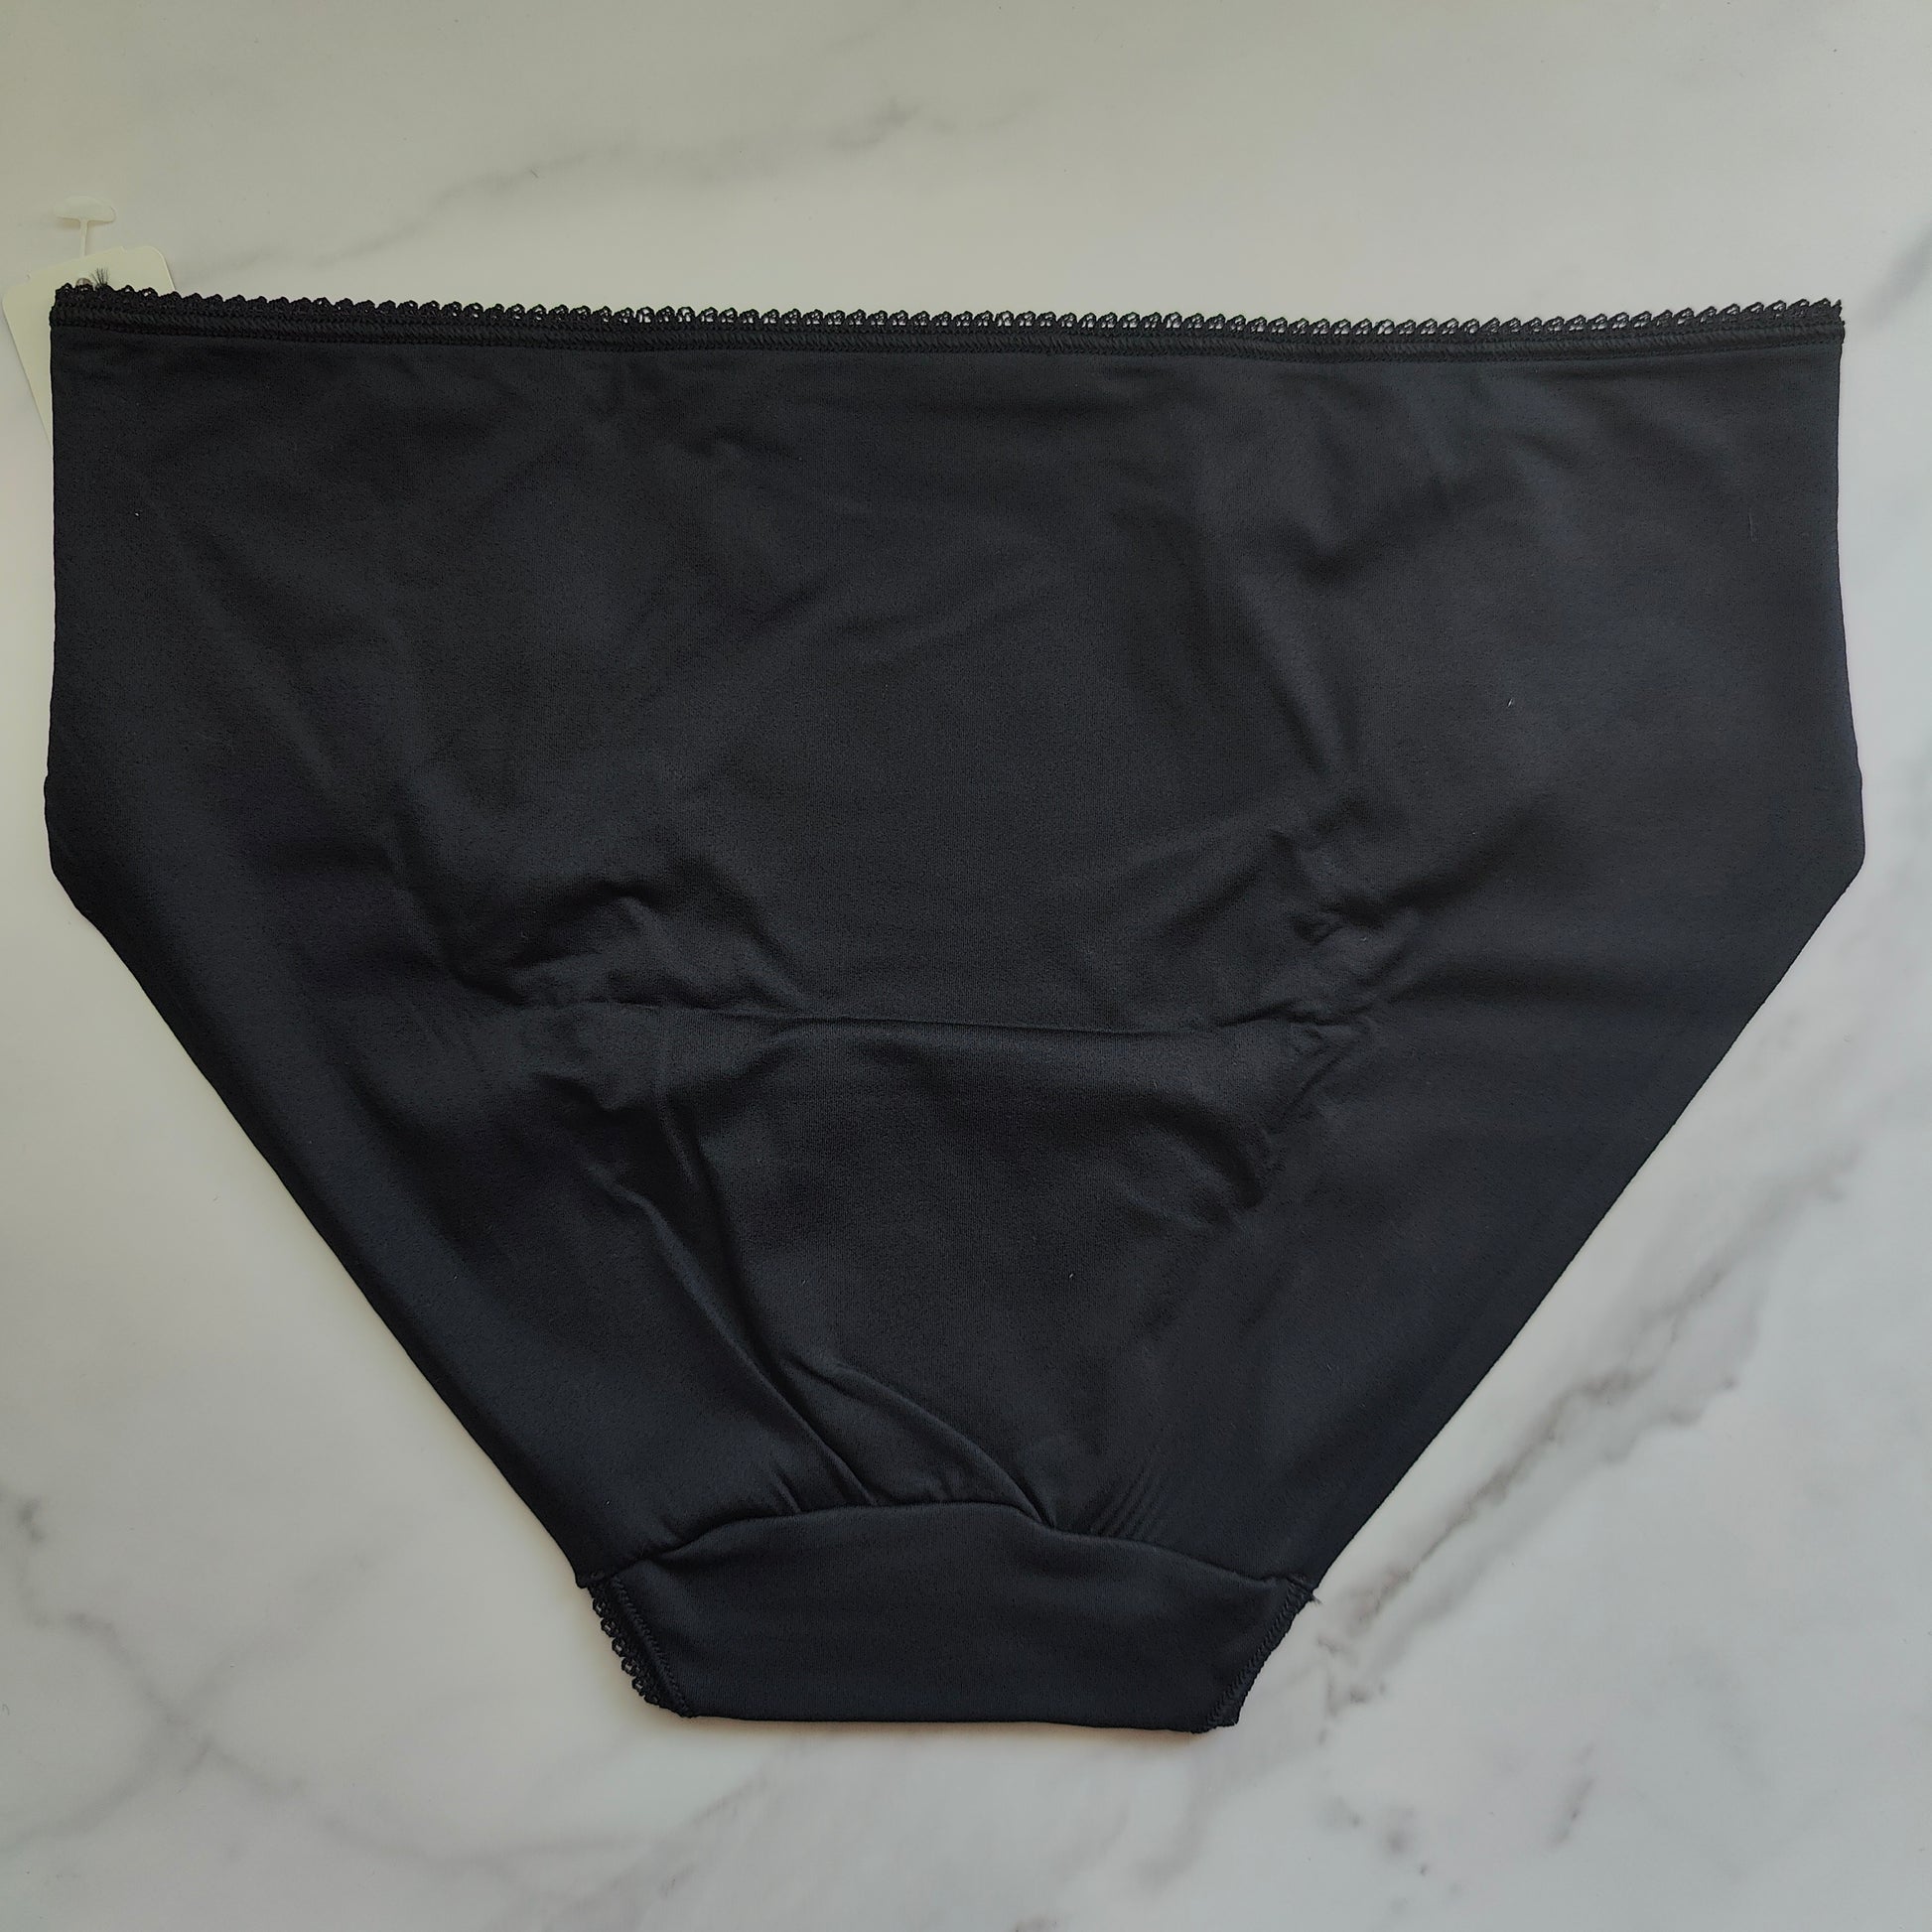 Soma Vanishing Edge Microfiber Bikini Underwear, Black, size M